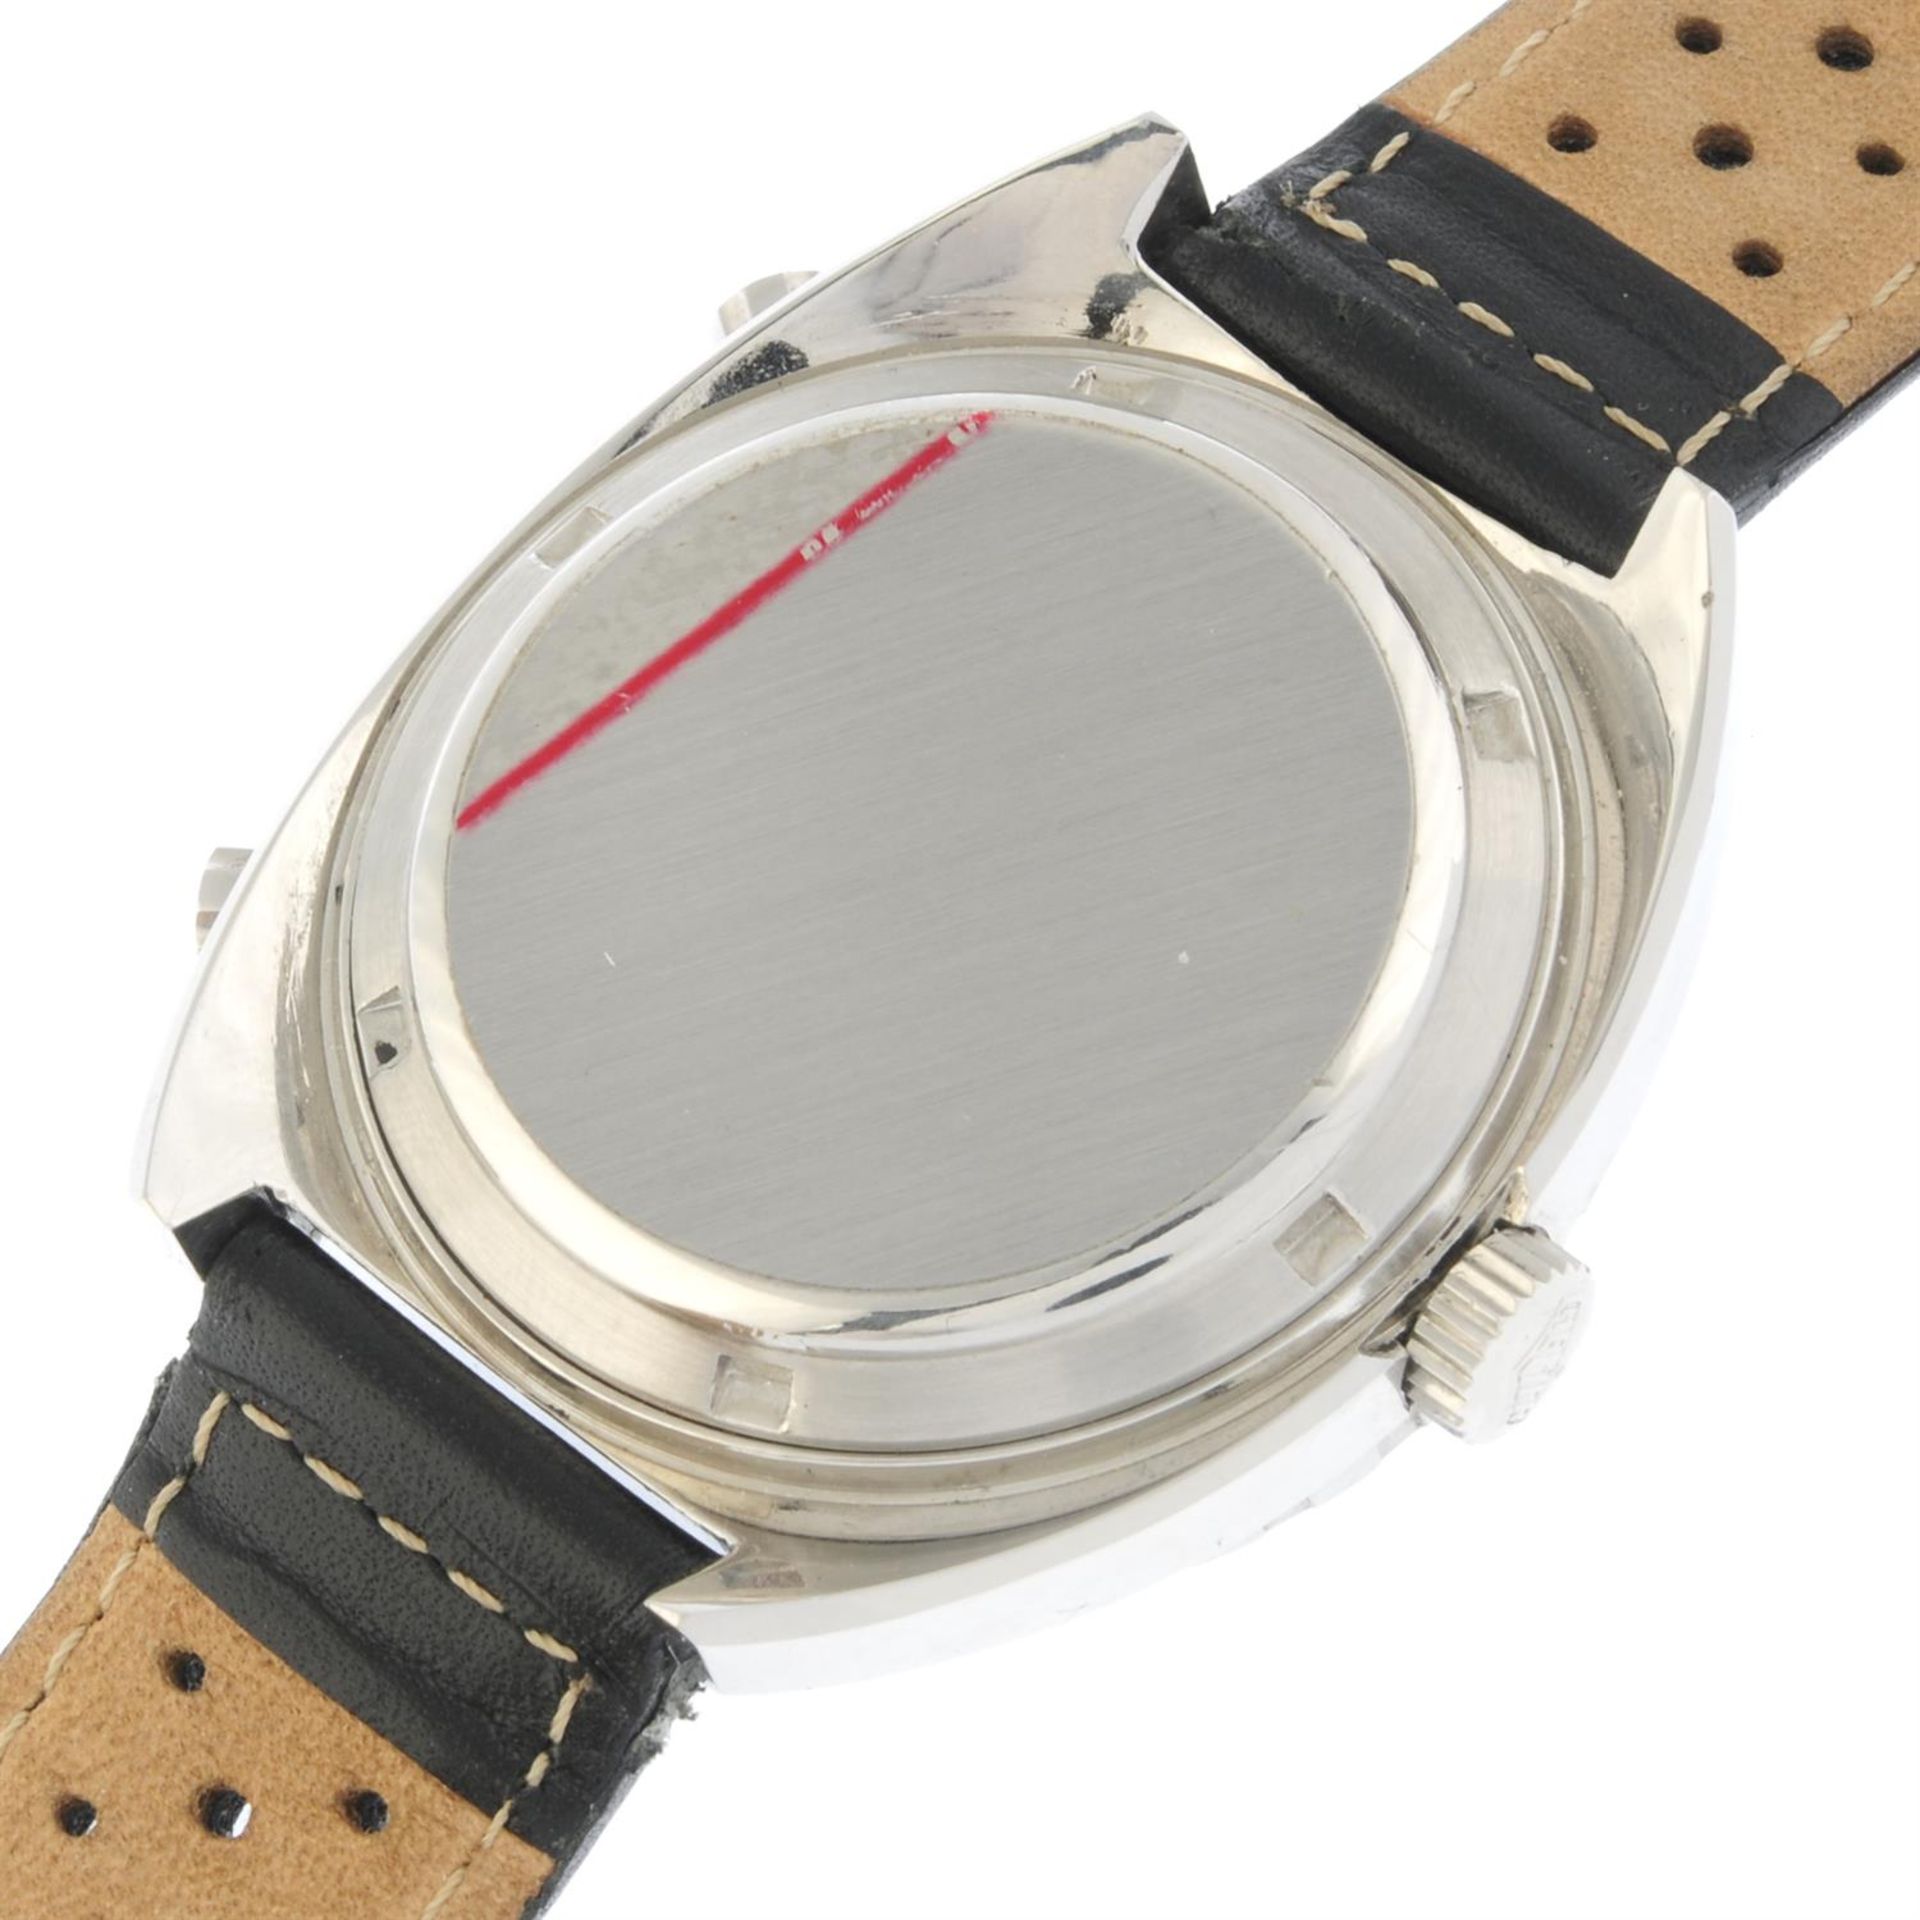 Heuer - an Autavia chronograph watch, 42mm. - Image 5 of 6